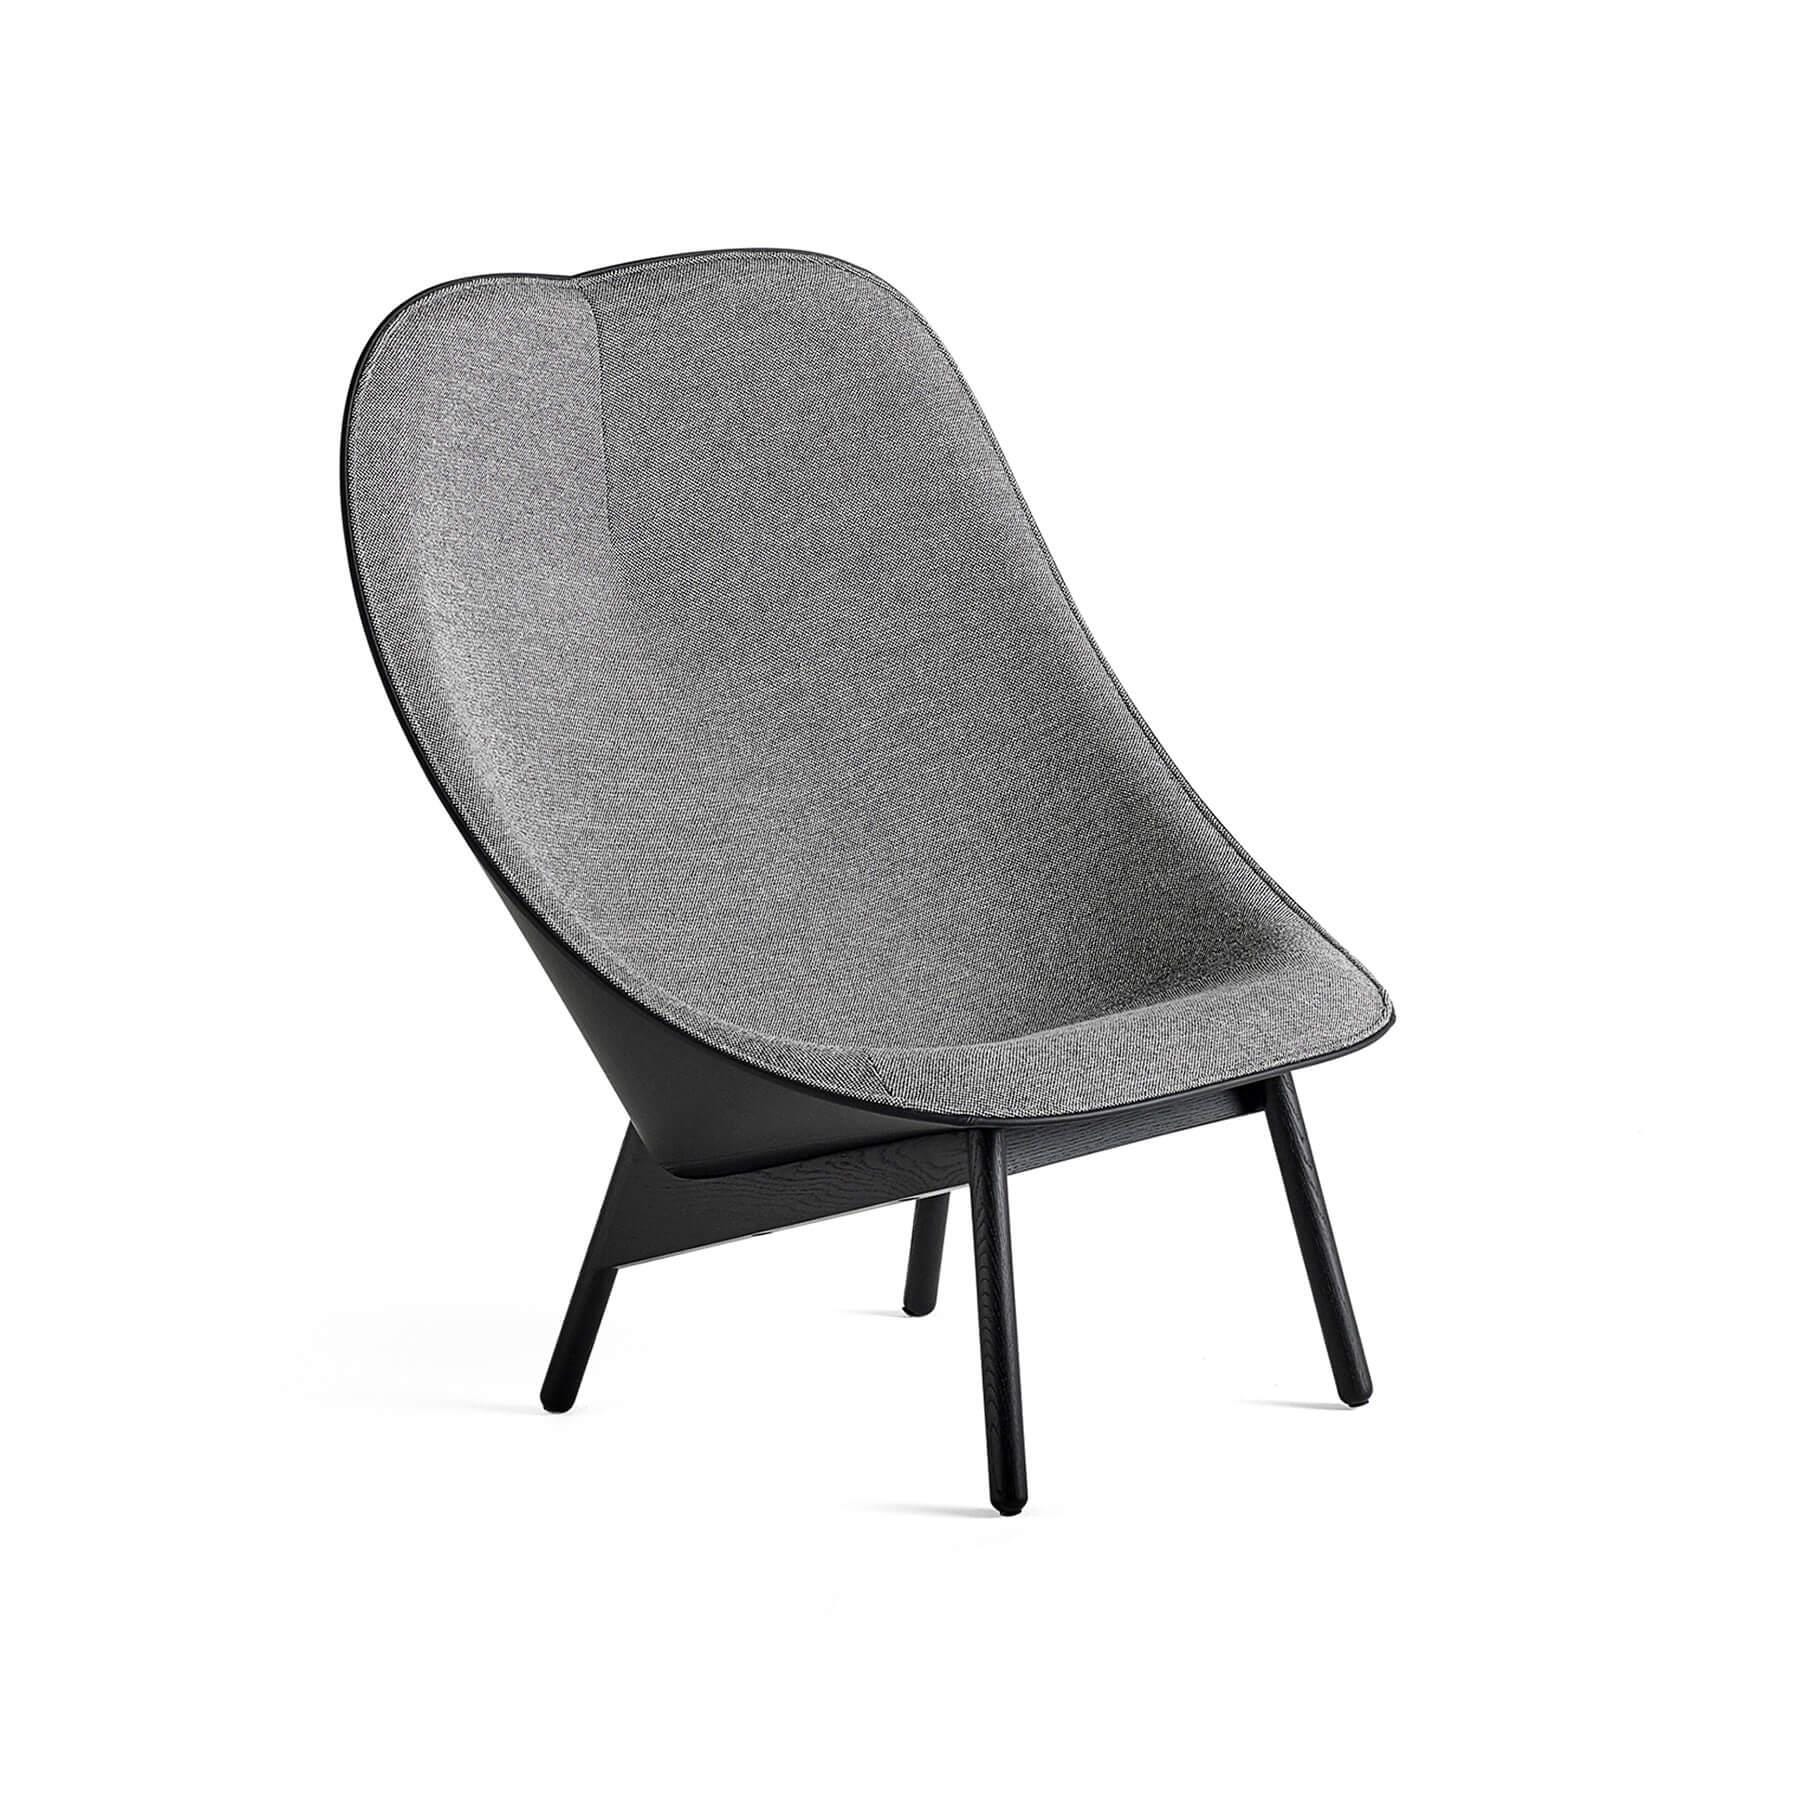 Hay Uchiwa Lounge Chair Standard Hallingdal 166 Sierra Si1001 Black Oak Base No Ottoman Grey Designer Furniture From Holloways Of Ludlow